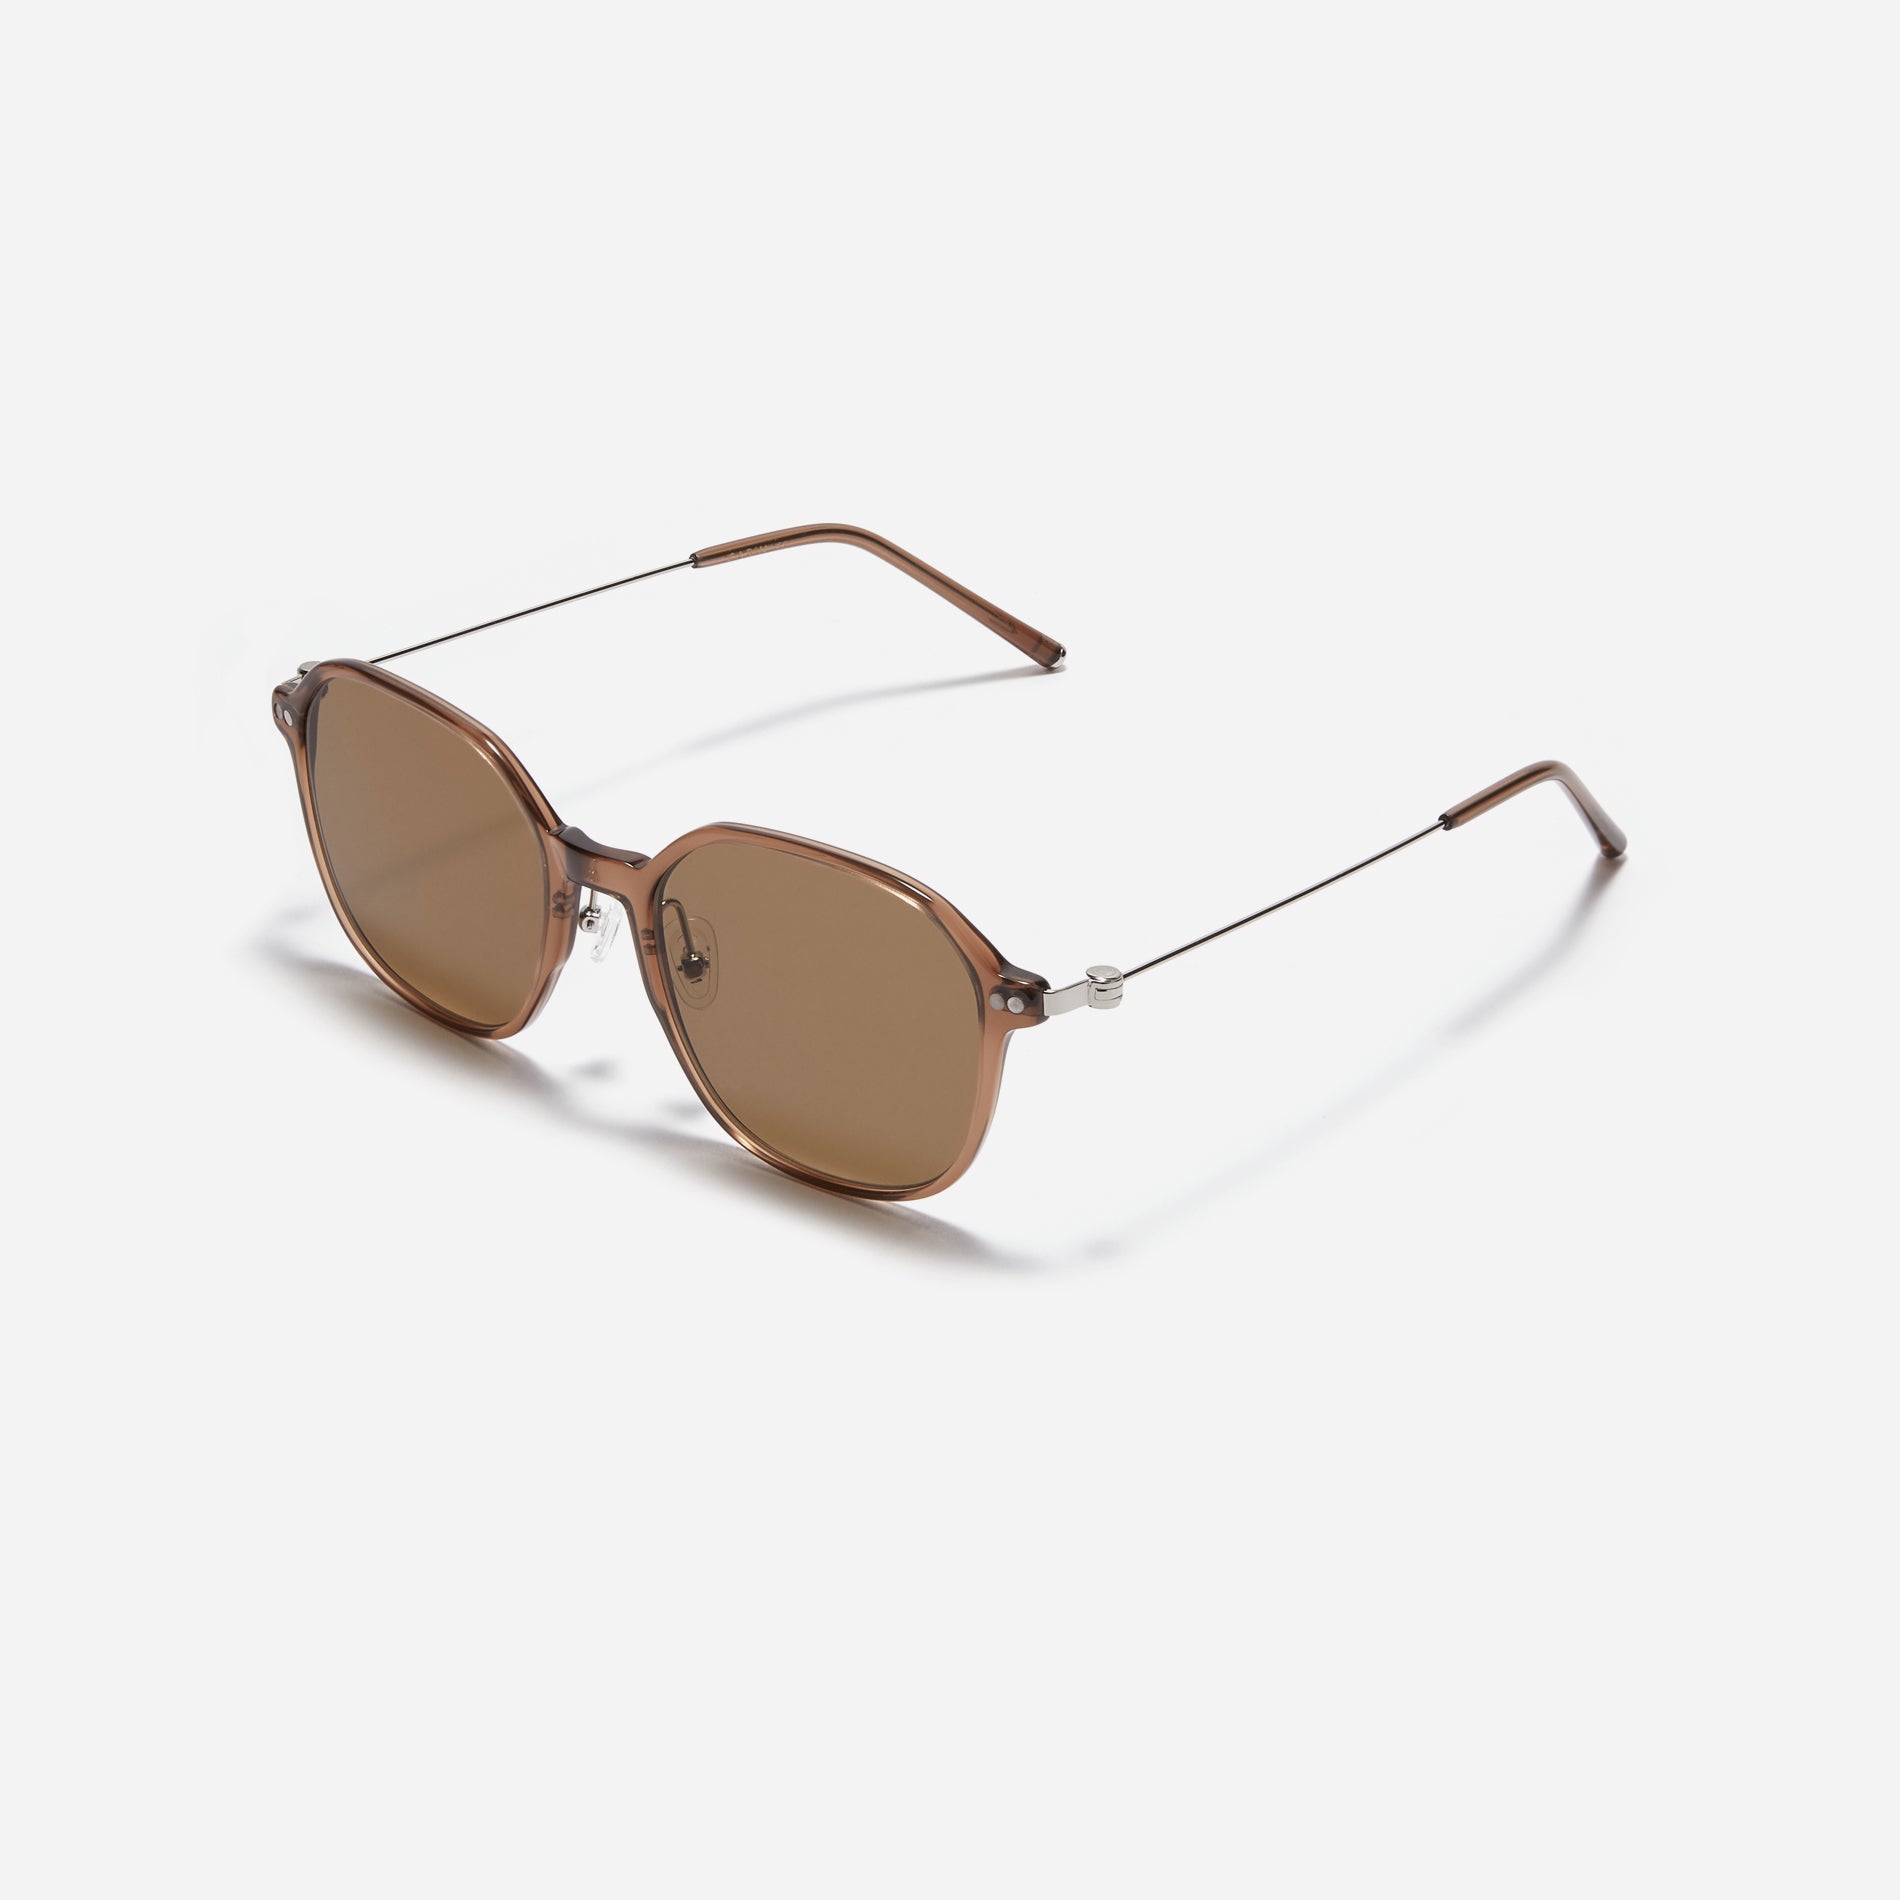 Polygonal-shaped combination sunglasses featuring oversized retro frame.